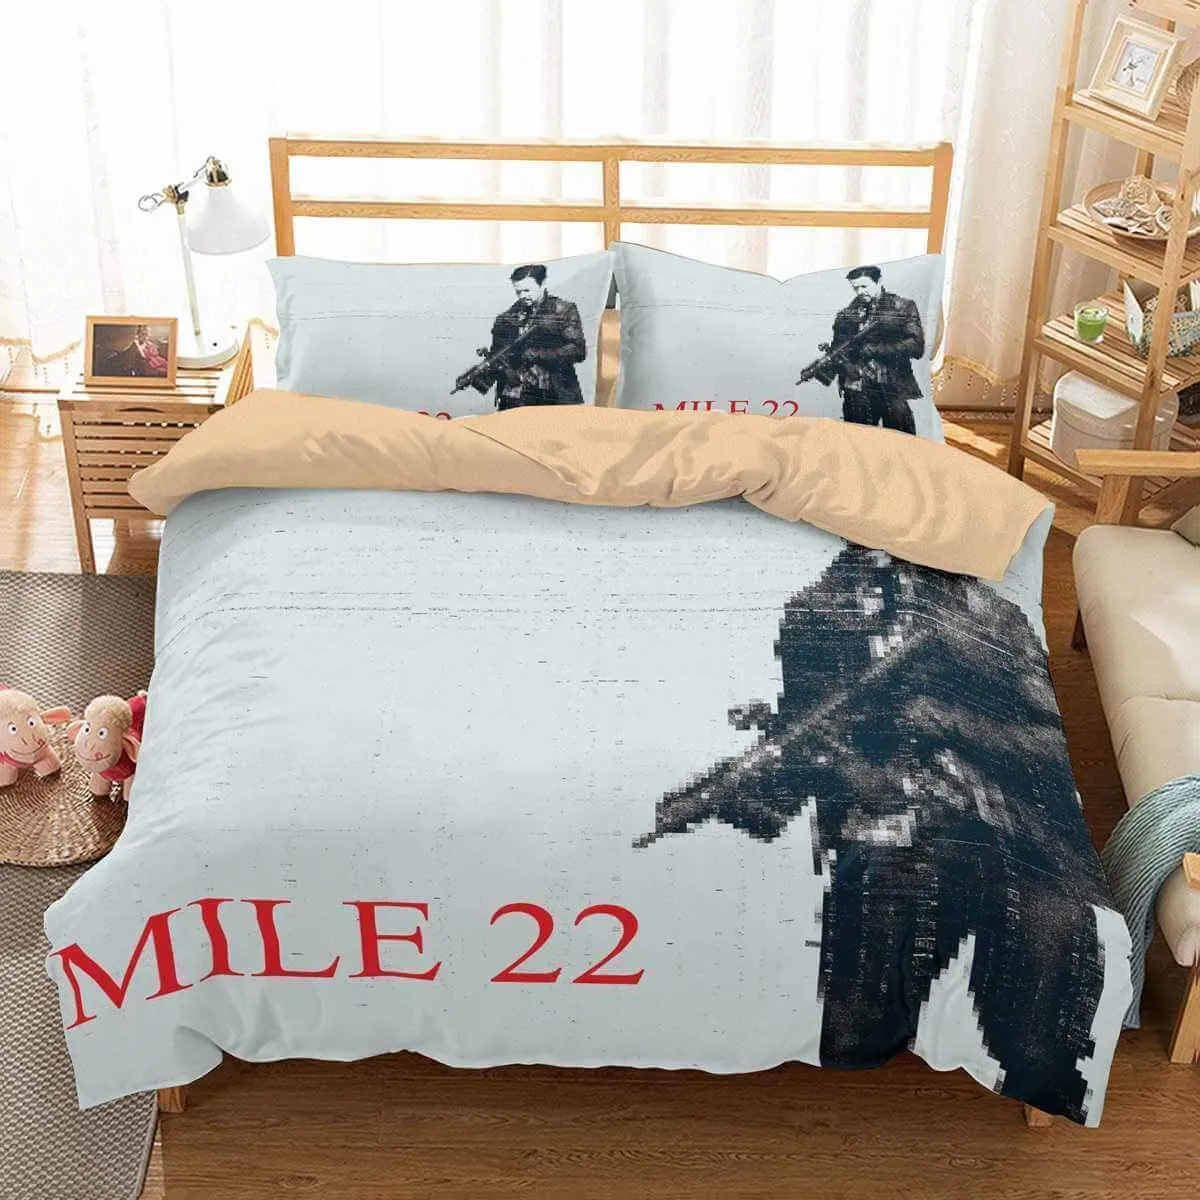 3D Customize Mile 22 Customized Duvet Cover Bedding Set